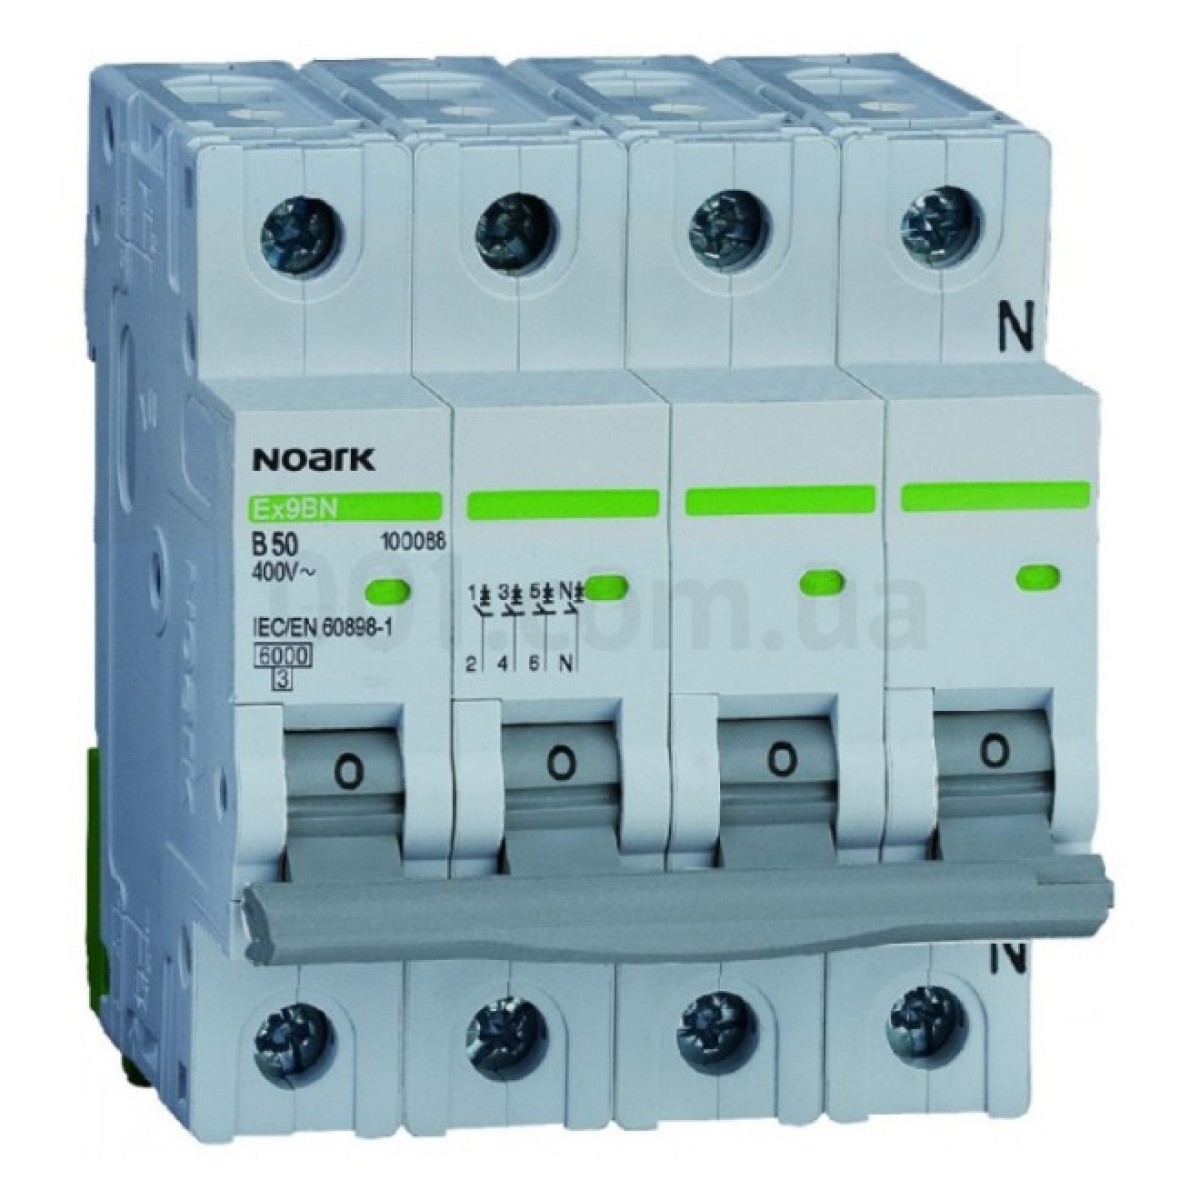 Модульный автоматический выключатель Ex9BN 6kA хар-ка C 63A 3P+N, NOARK 256_256.jpg